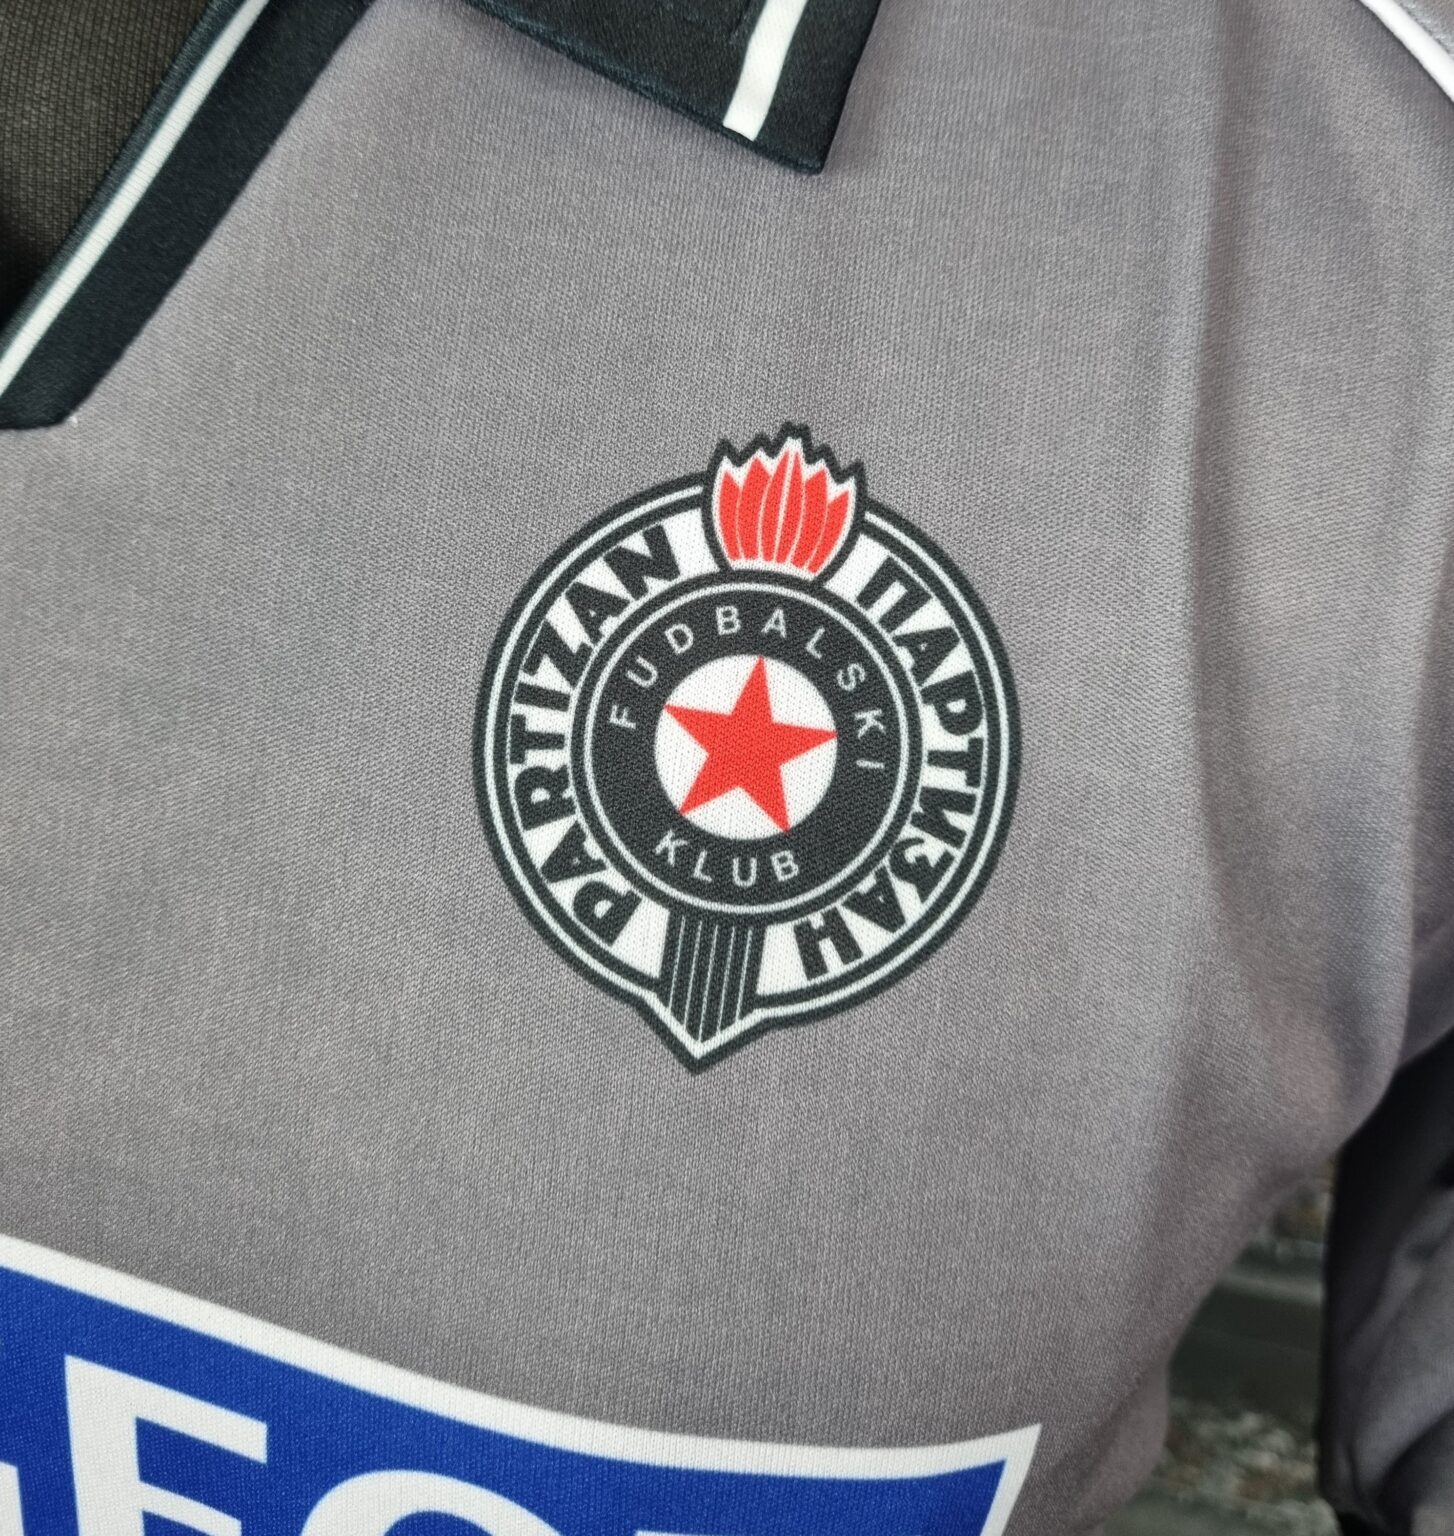 Partizan Belgrade Dres Away Retro 2000 vs Porto Jersey Football Shirt Serbia Peugeot - Sport Club Memories